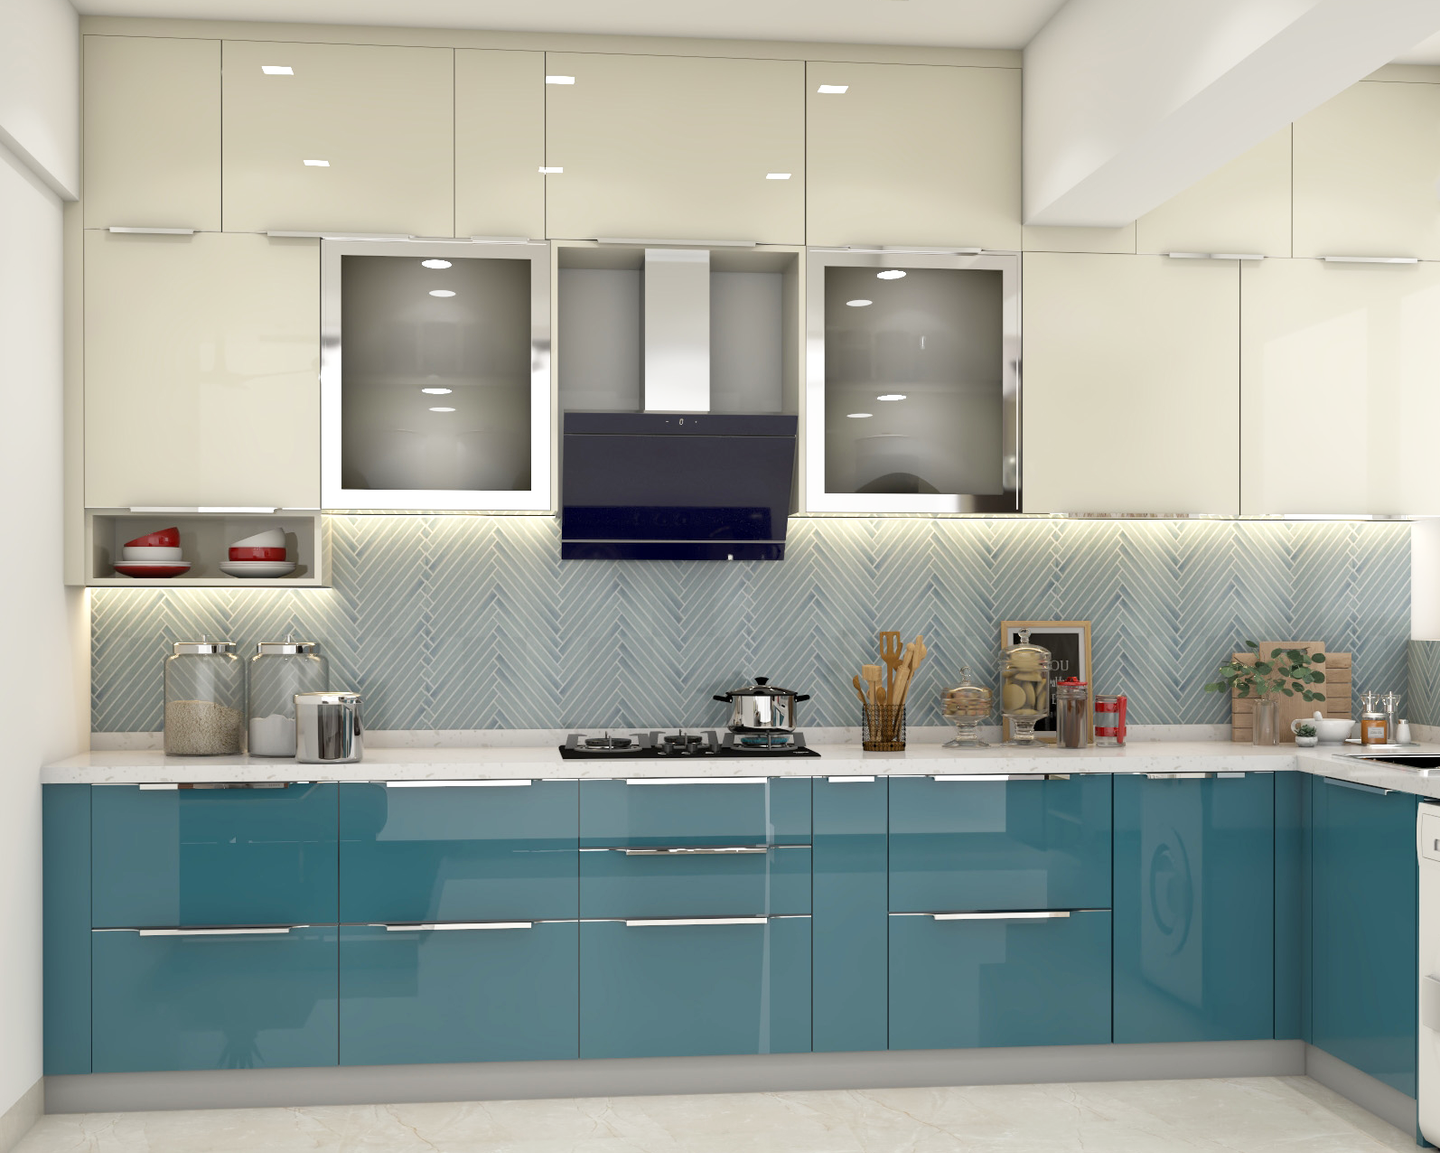 Vast Vibrant Kitchen With Modular Interiors - Livspace